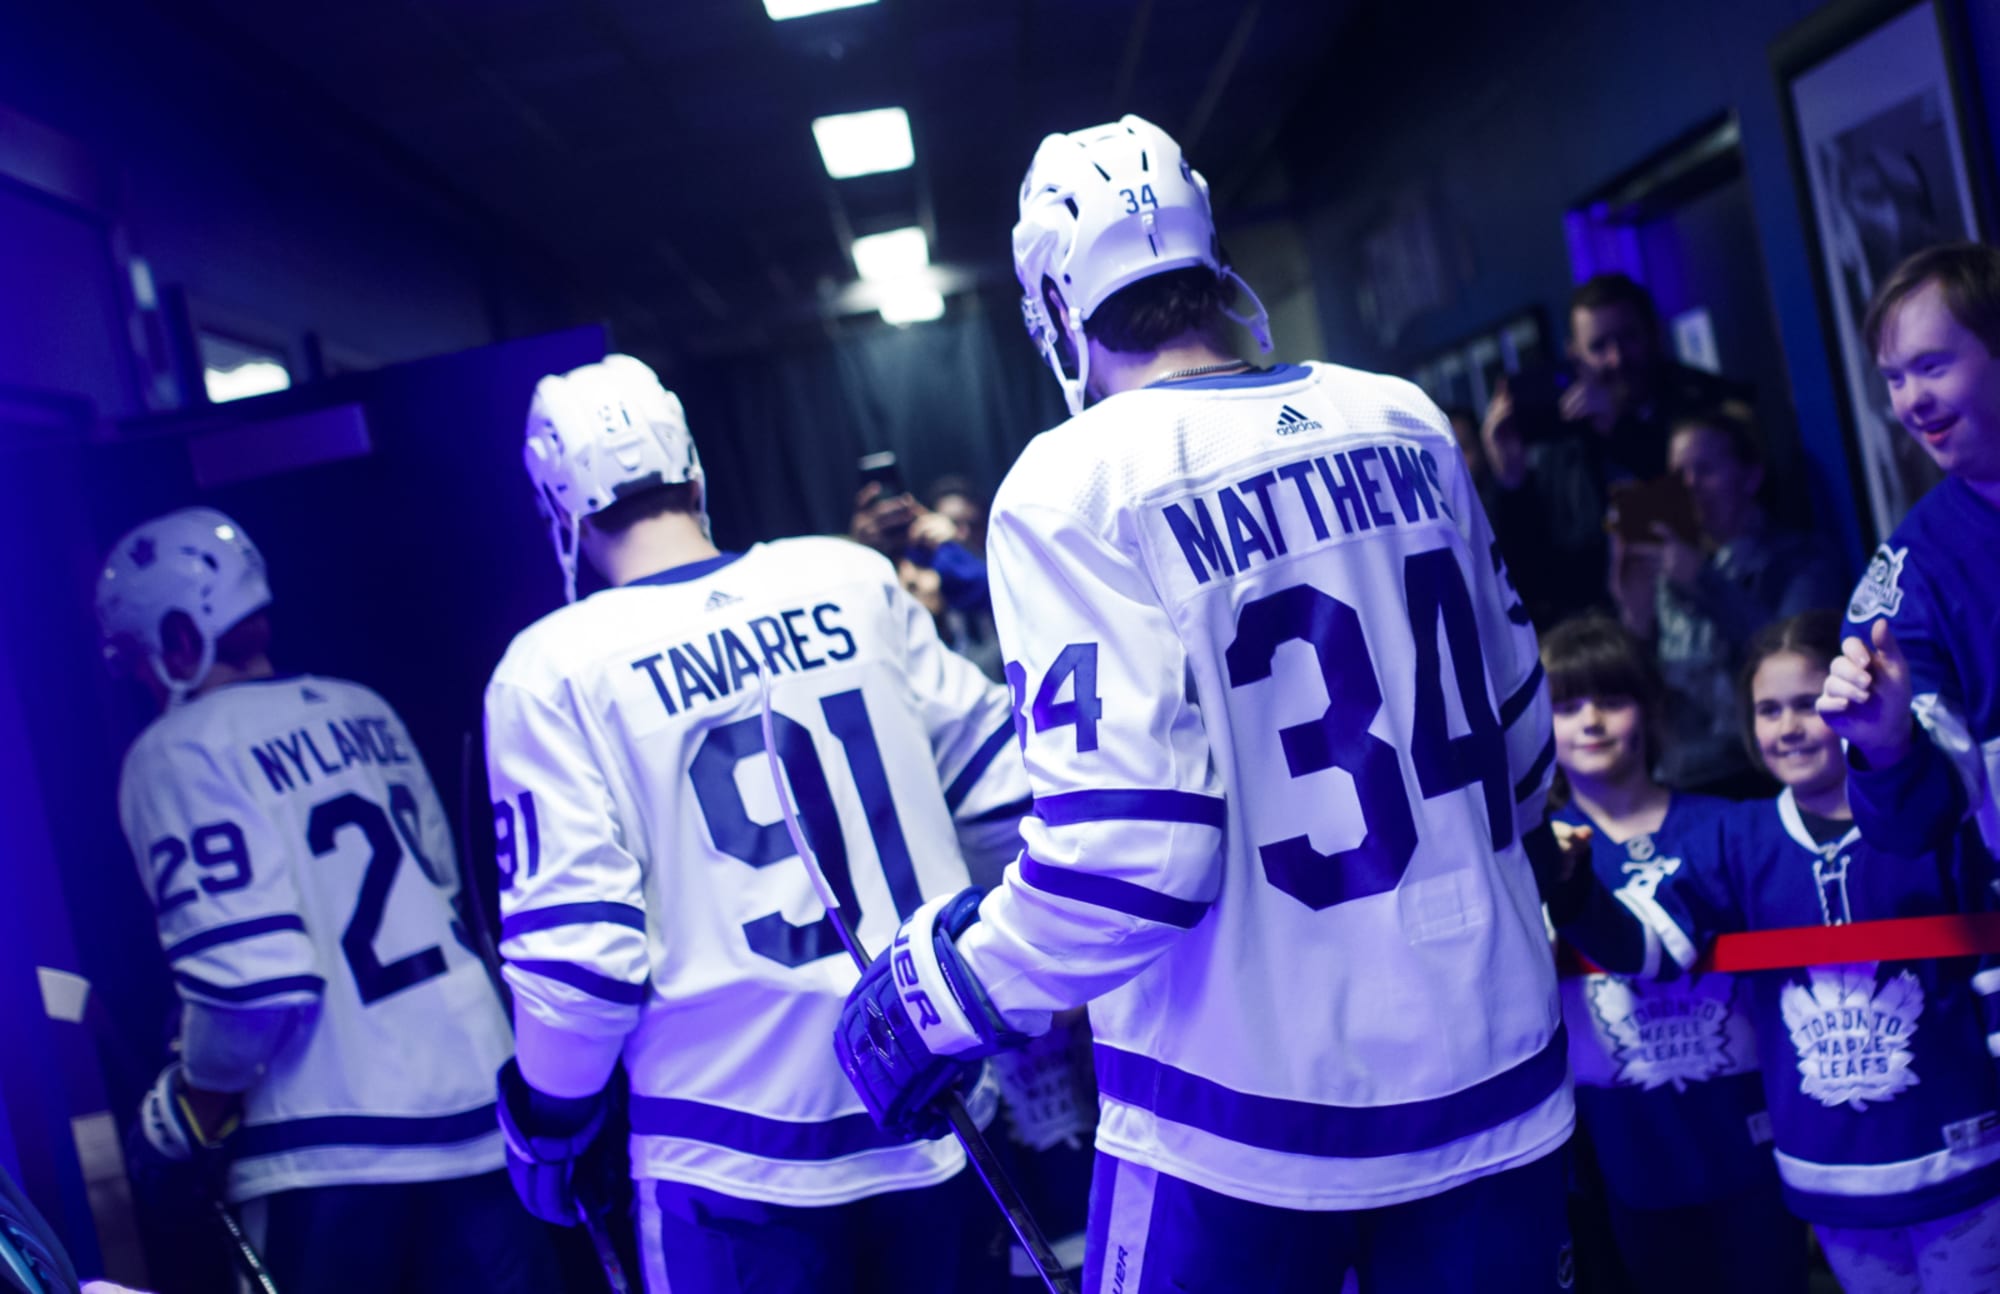 Toronto Maple Leafs Auston Matthews William Nylander Mitch Marner  signatures shirt